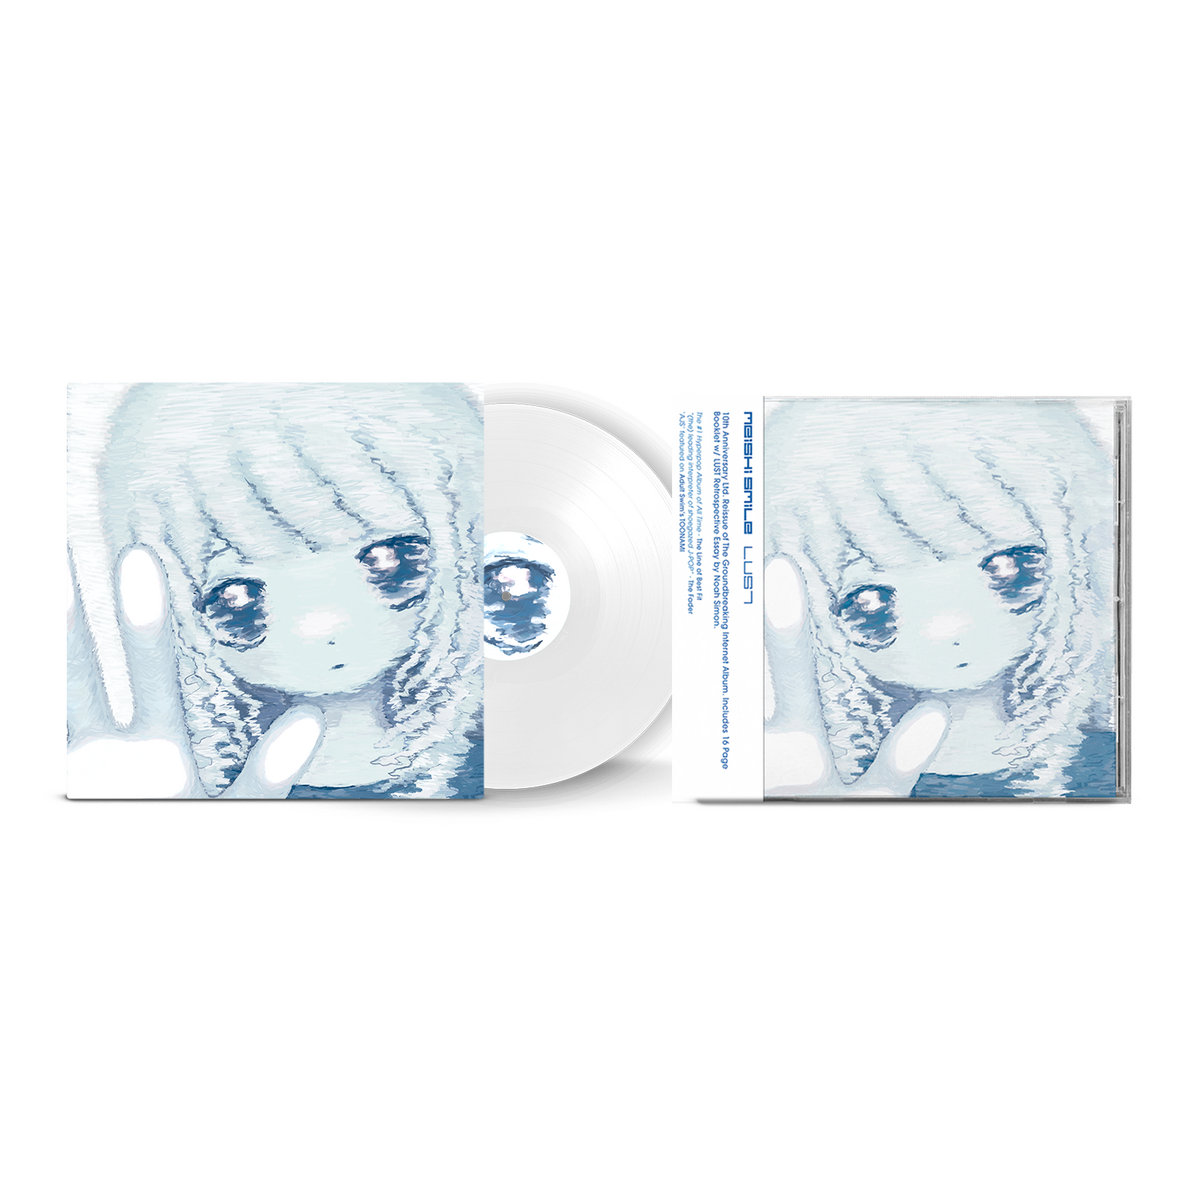 LUST 10th Anniversary CD + LP Pre-Order on Bandcamp (RIP)! Includes New Retrospective Essay + Bonus CD of 10 Unreleased Tracks 🔵 meishismile.bandcamp.com/album/lust-10t…